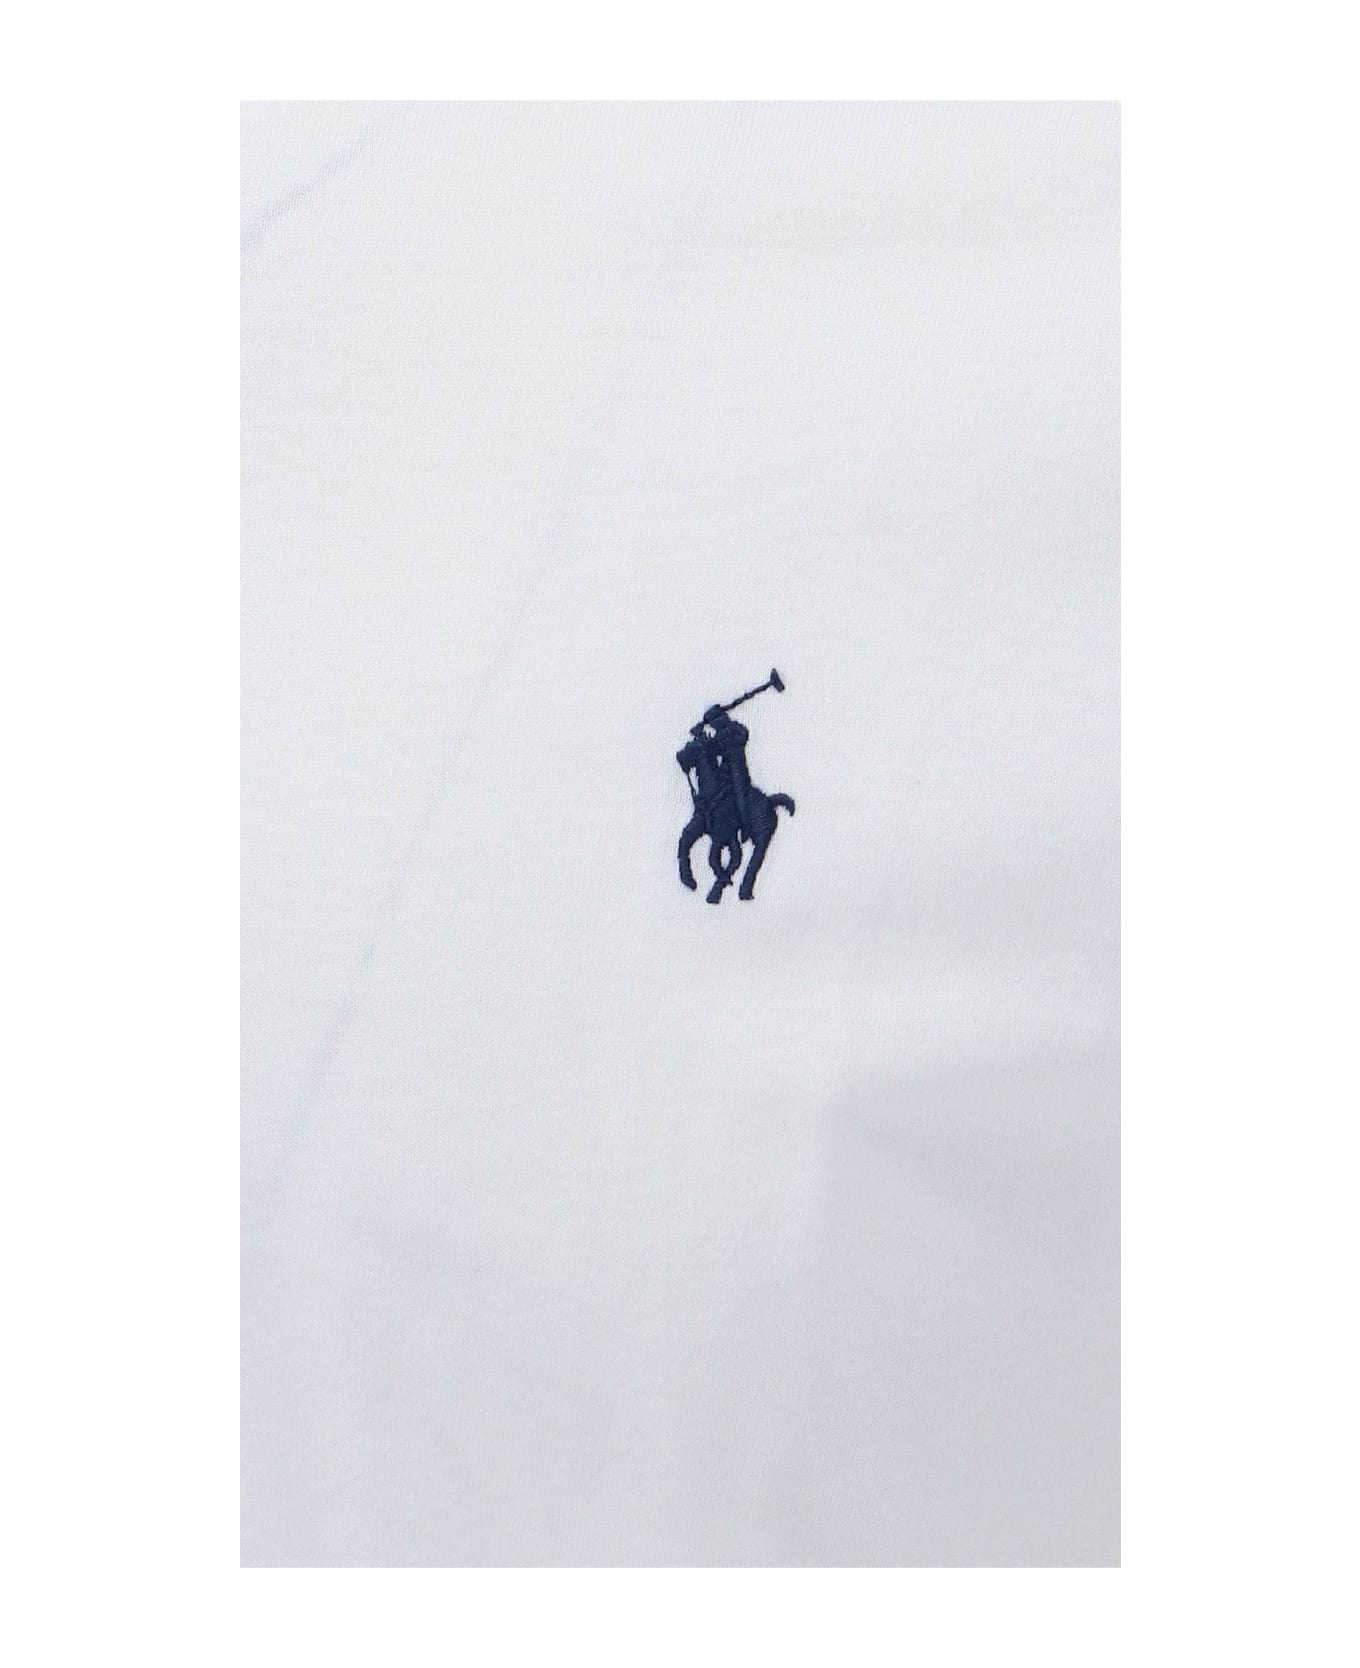 Polo Ralph Lauren Classic Logo T-shirt - White